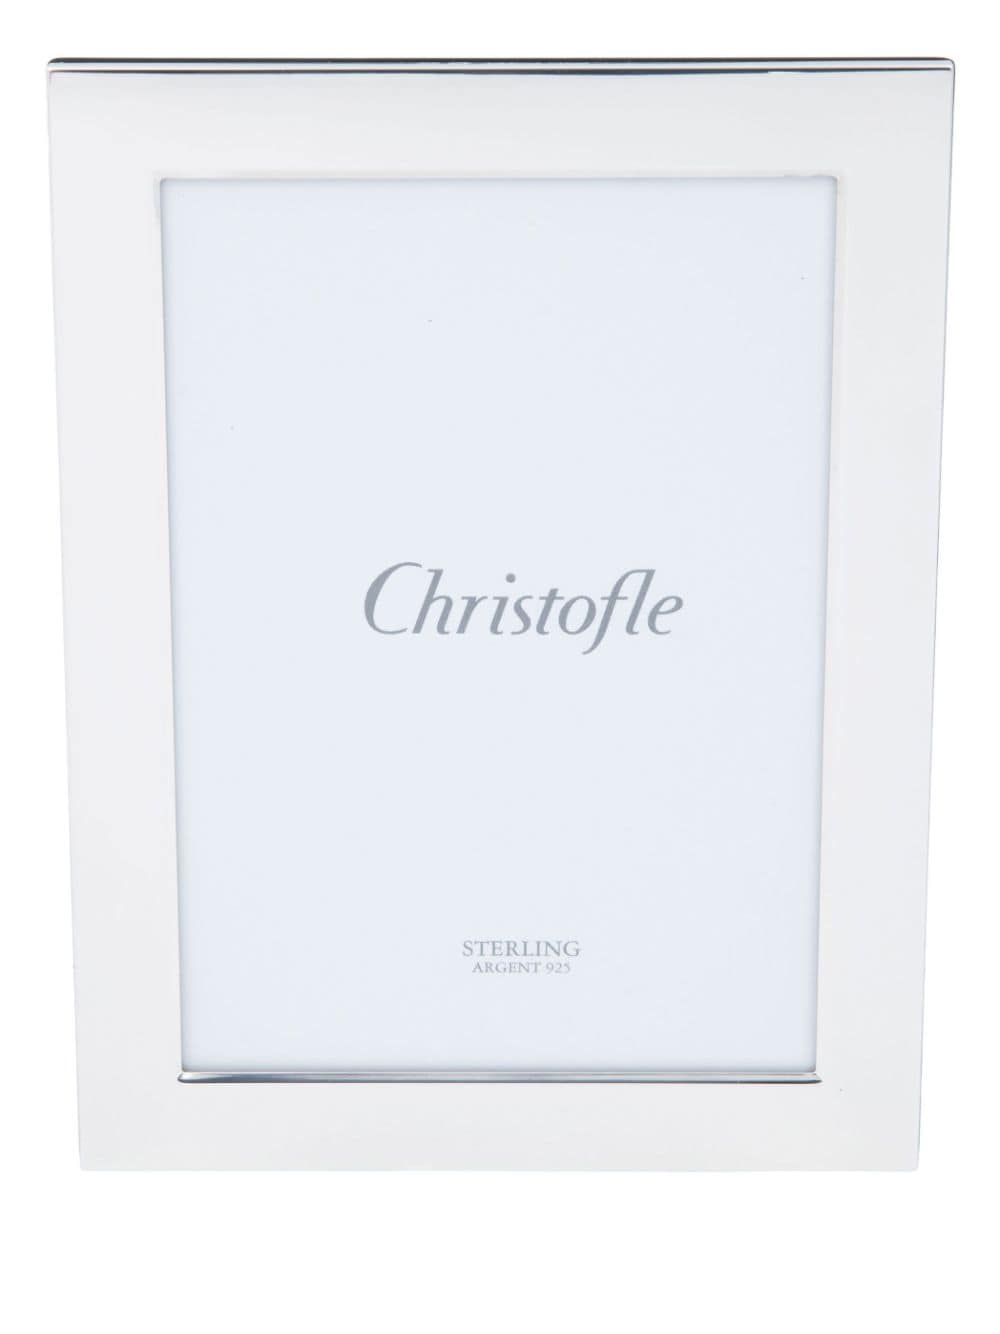 Christofle Fidelio Argent photo frame - Silver von Christofle